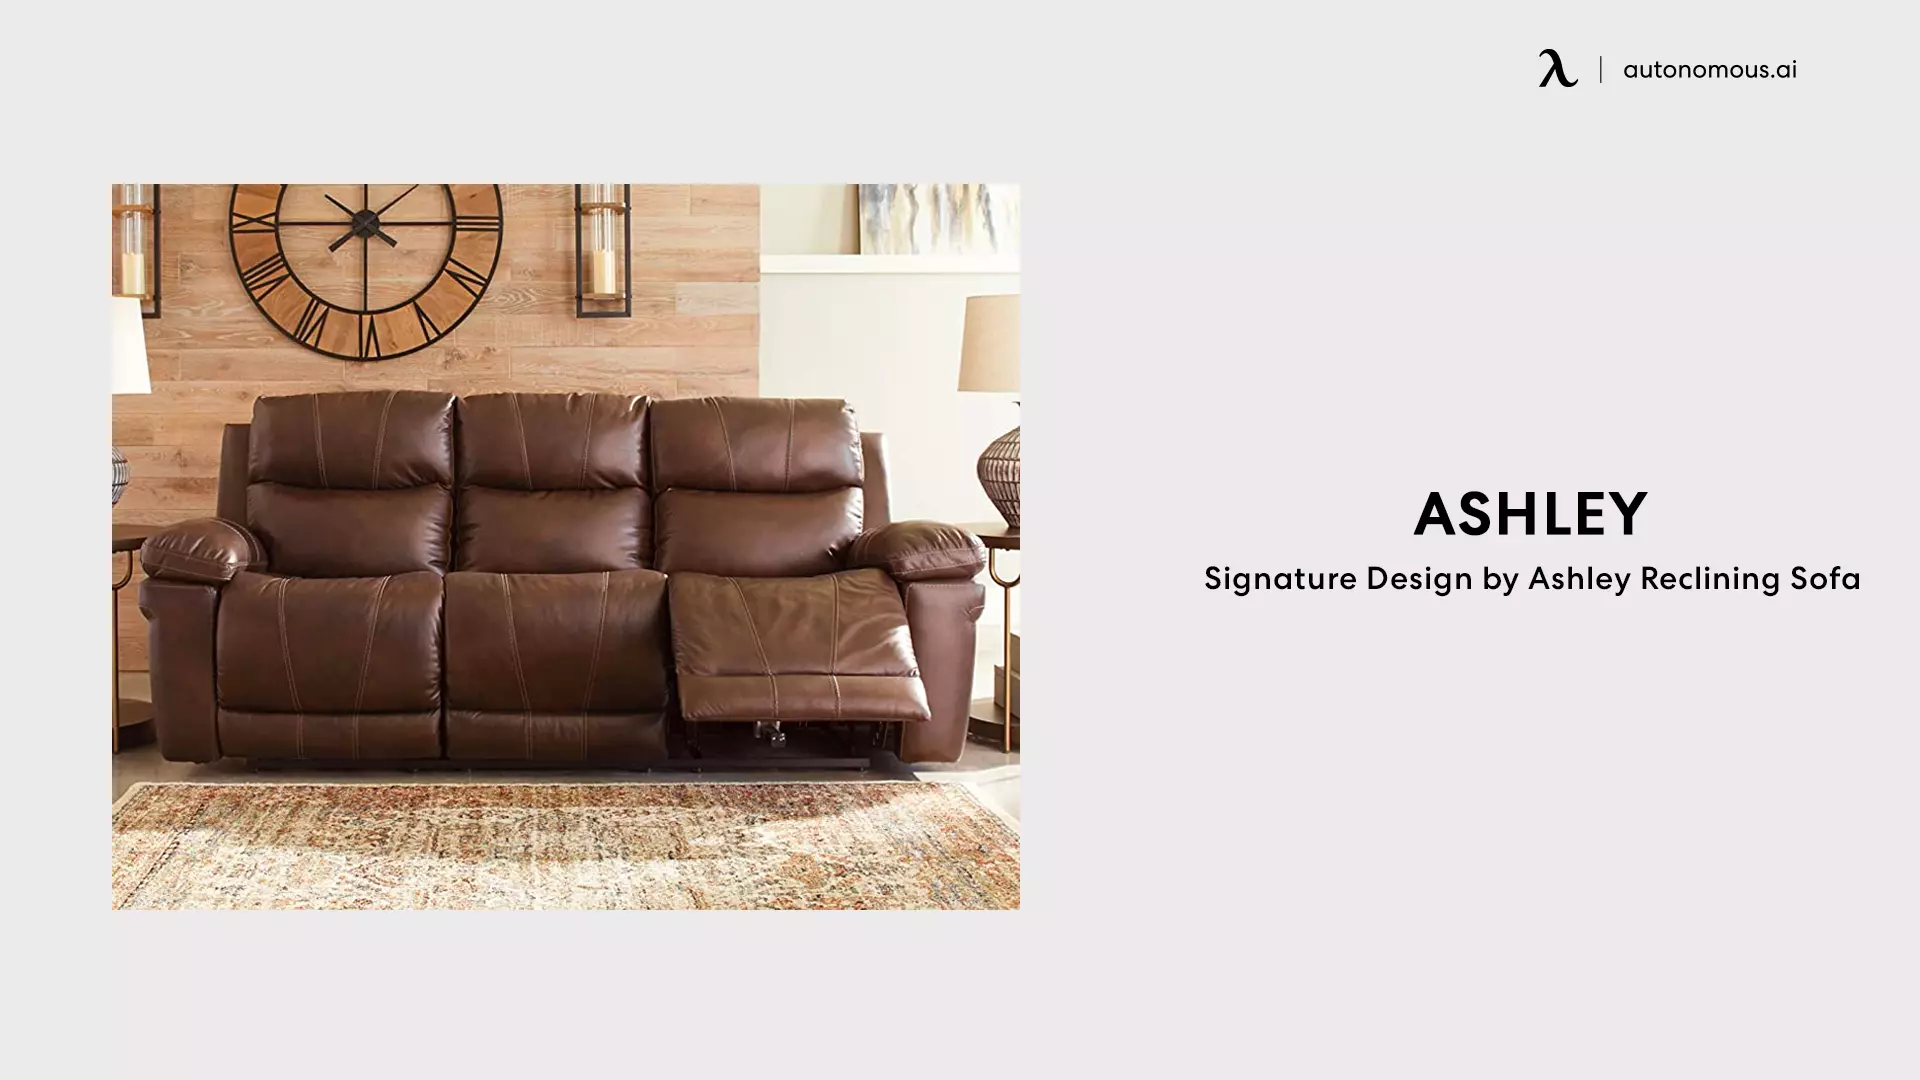 Signature Design by Ashley Reclining Sofa